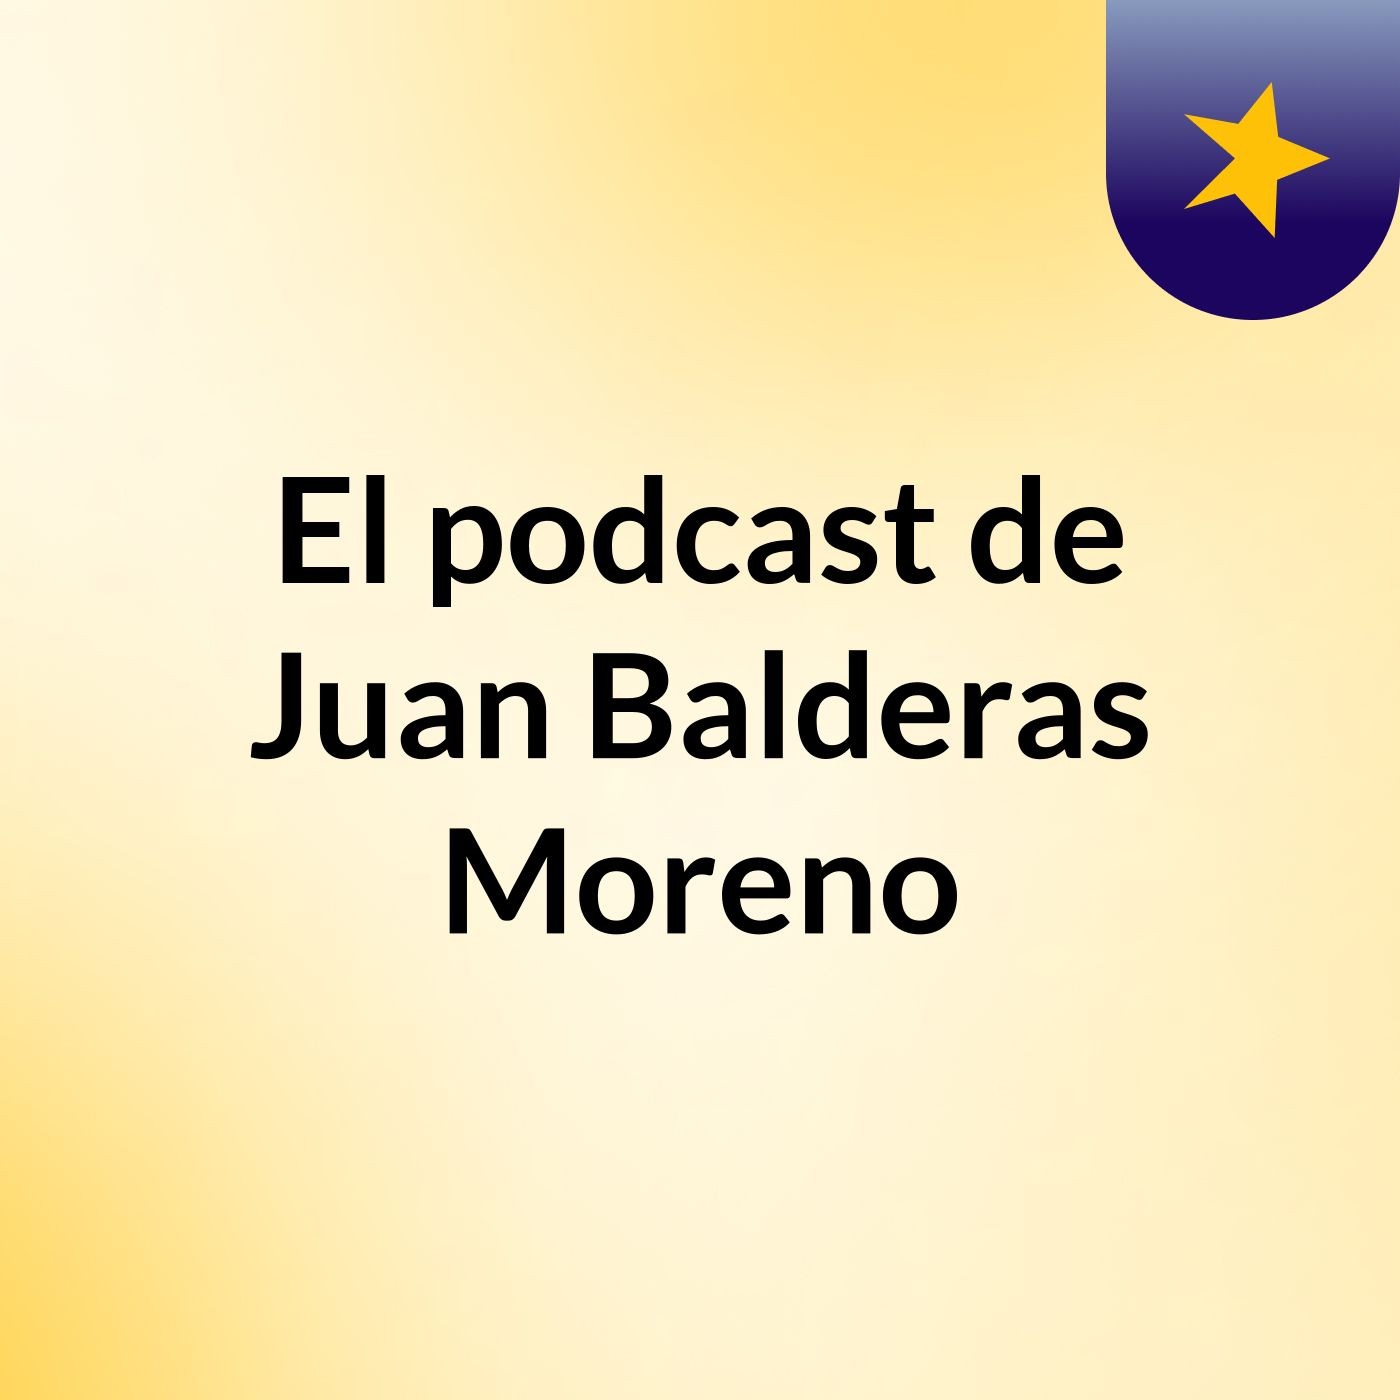 El podcast de Juan Balderas Moreno